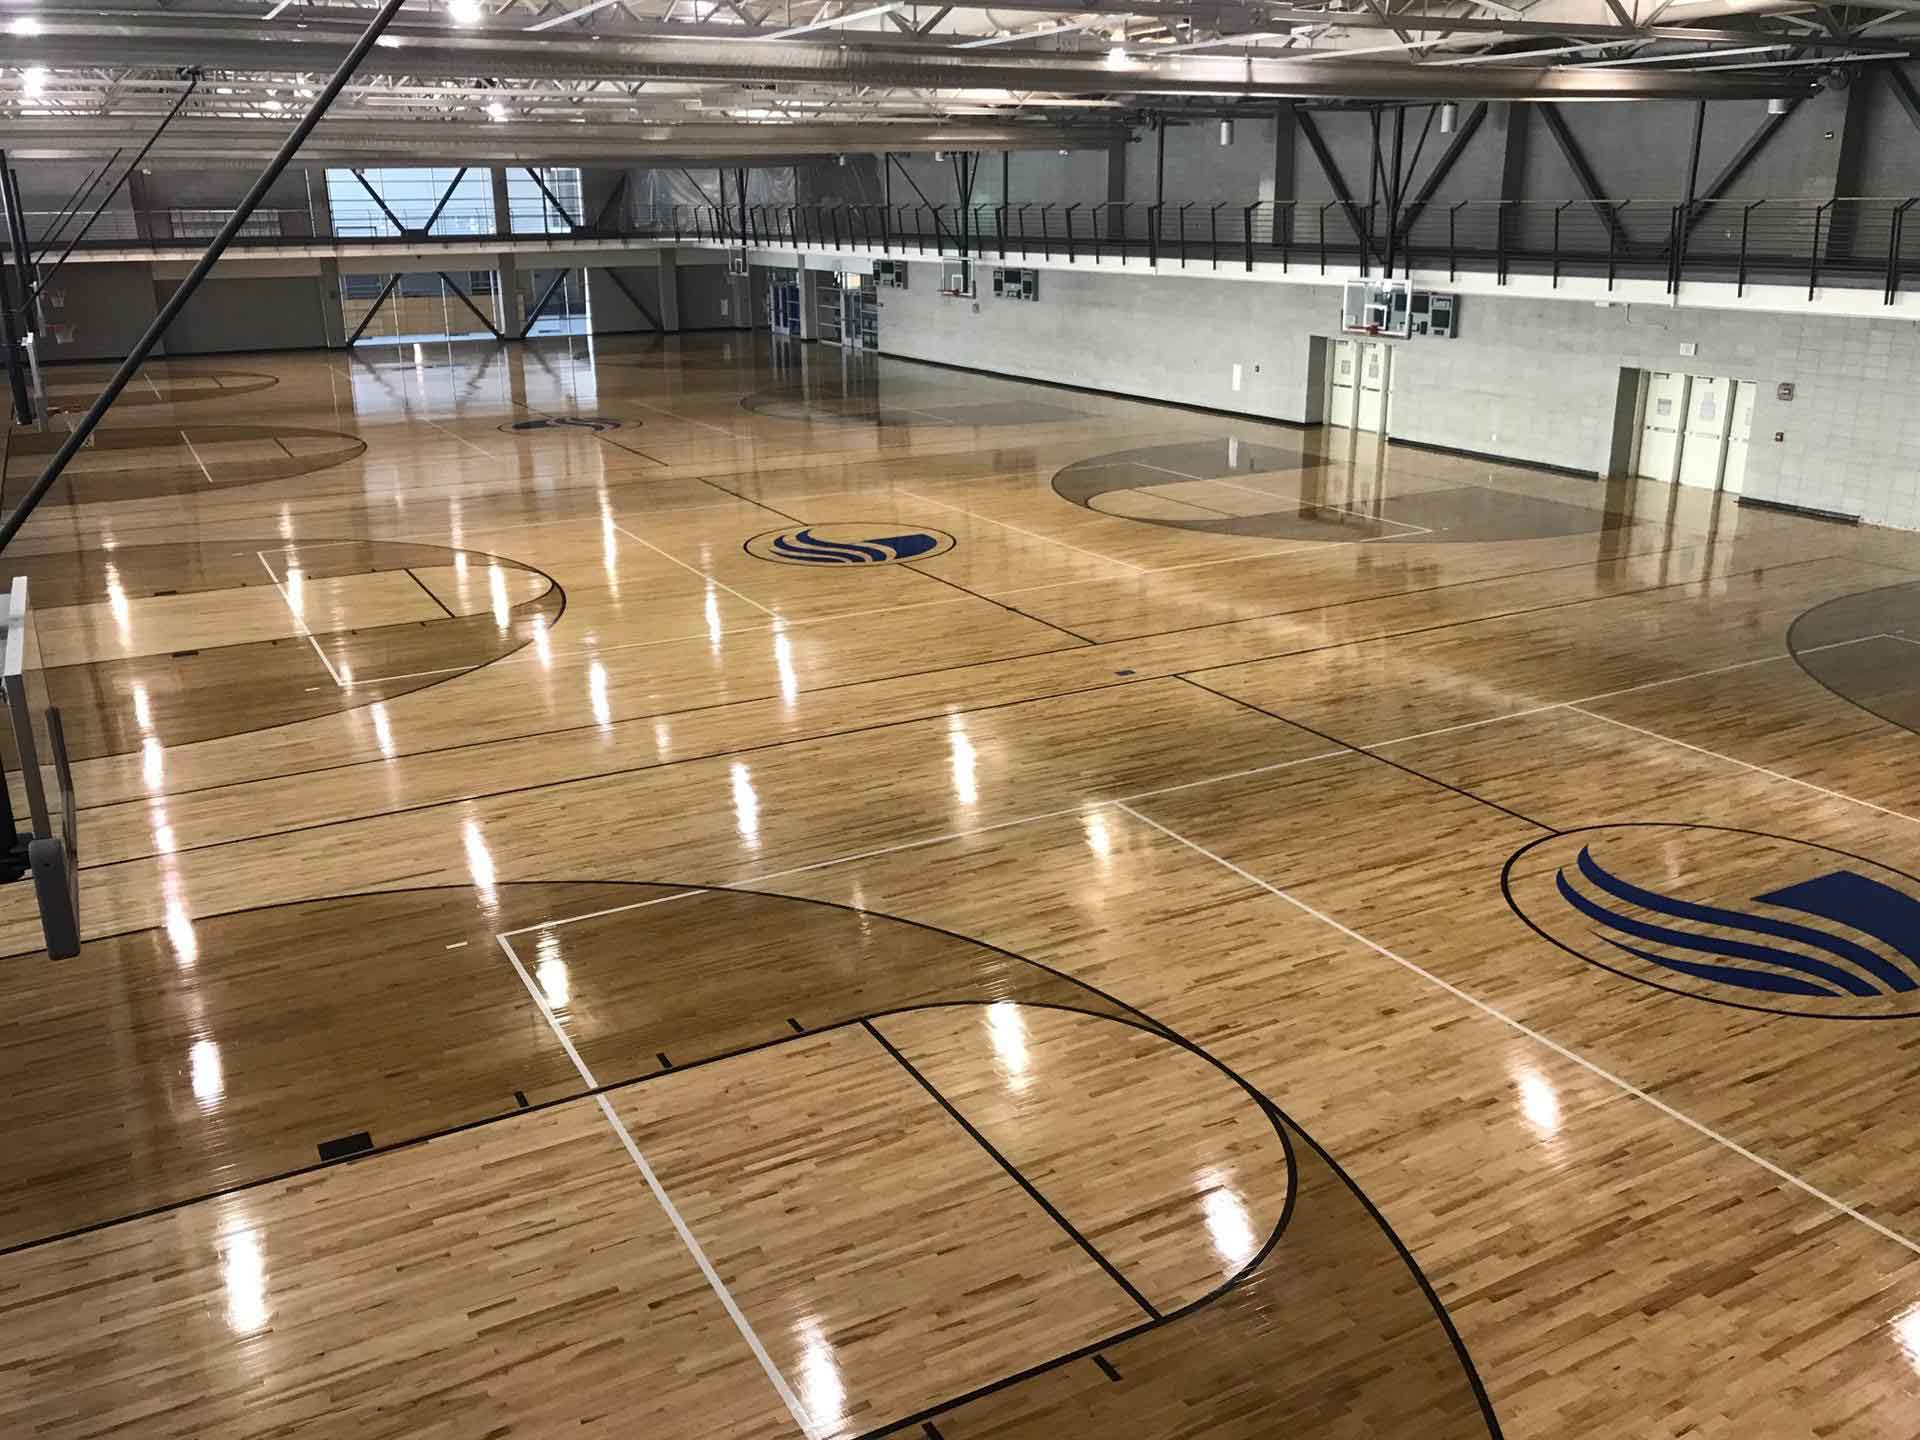 Facility Gym Flooring, Outdoor Basketball Court Flooring